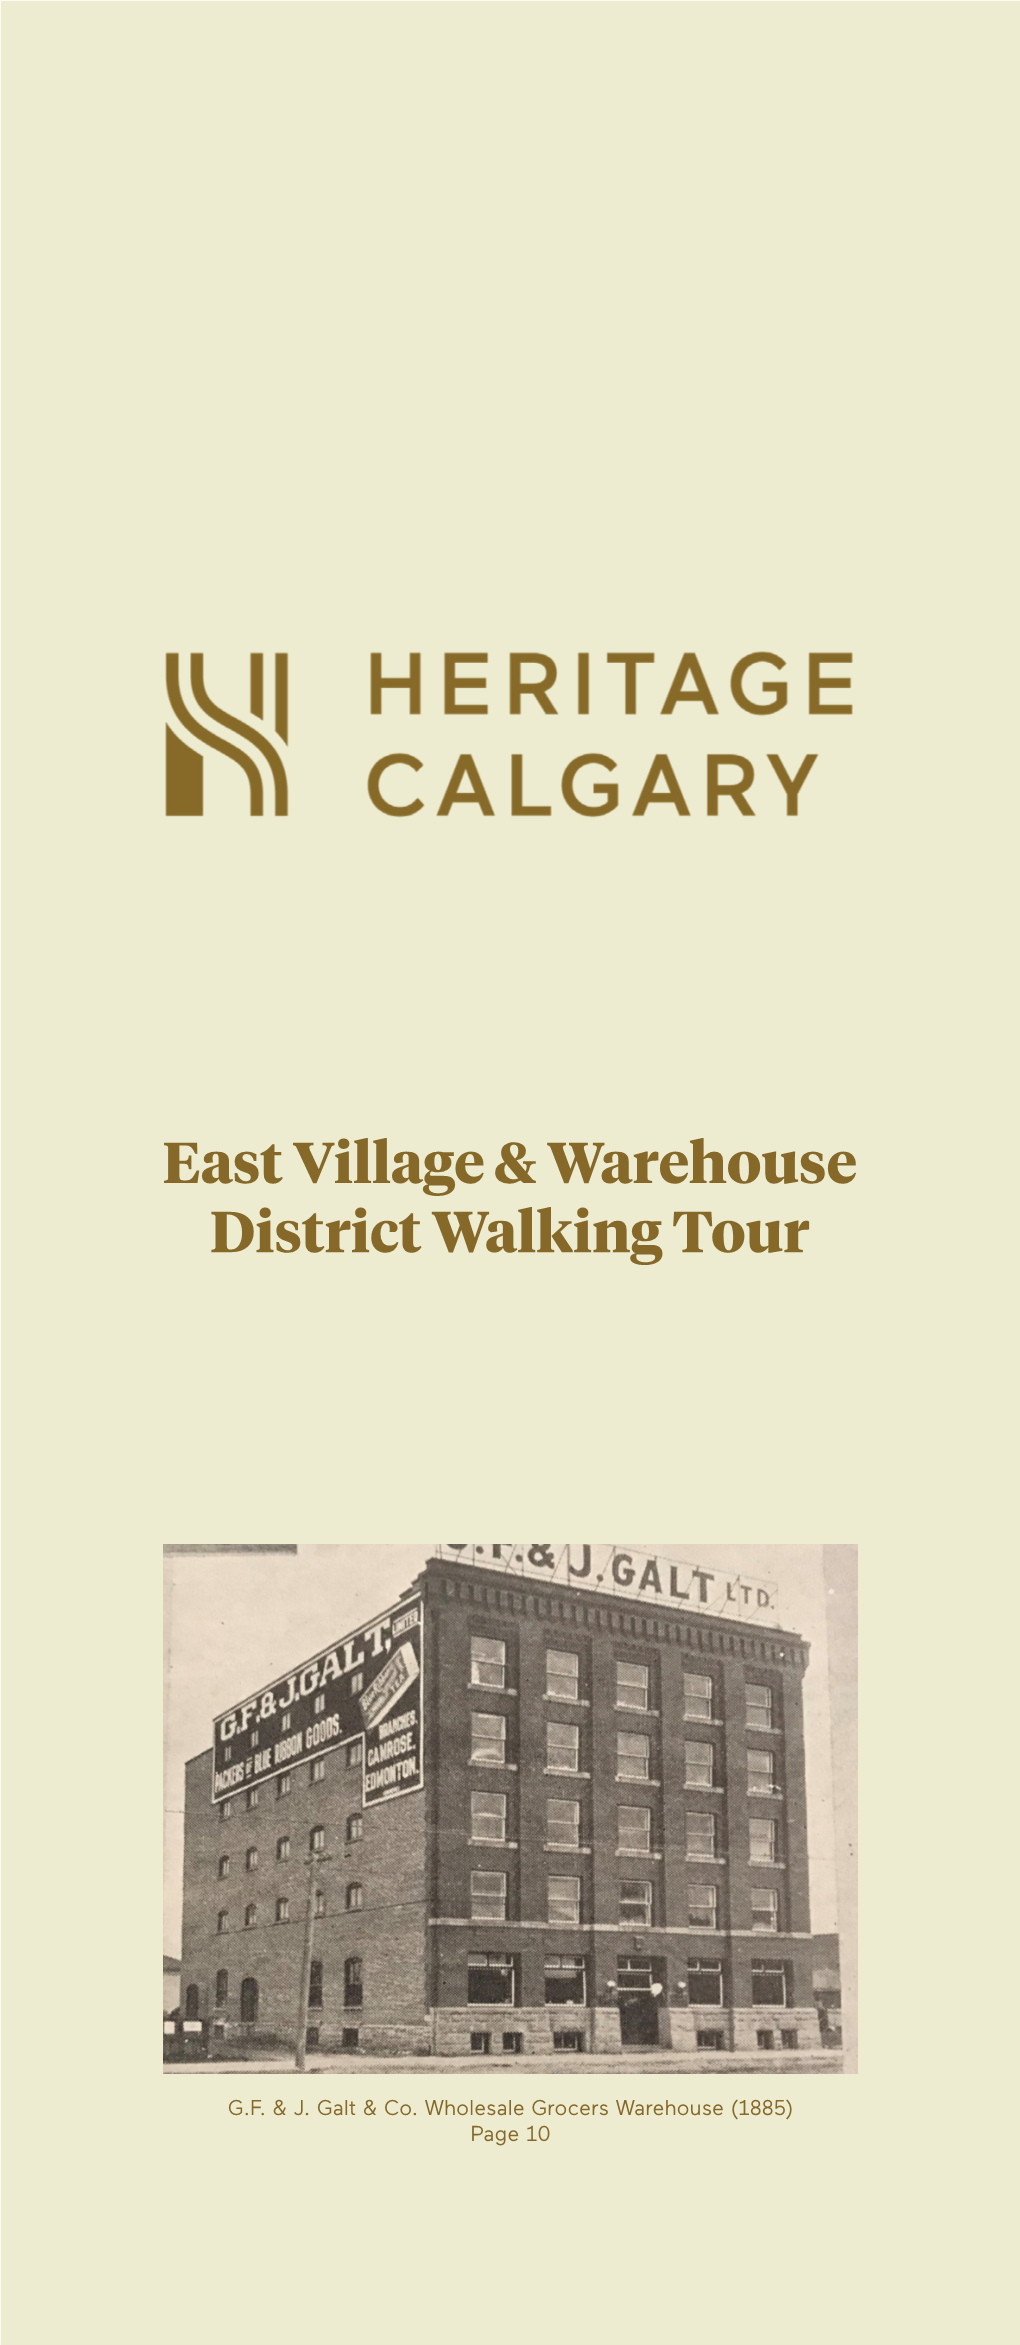 East Village & Warehouse District Walking Tour